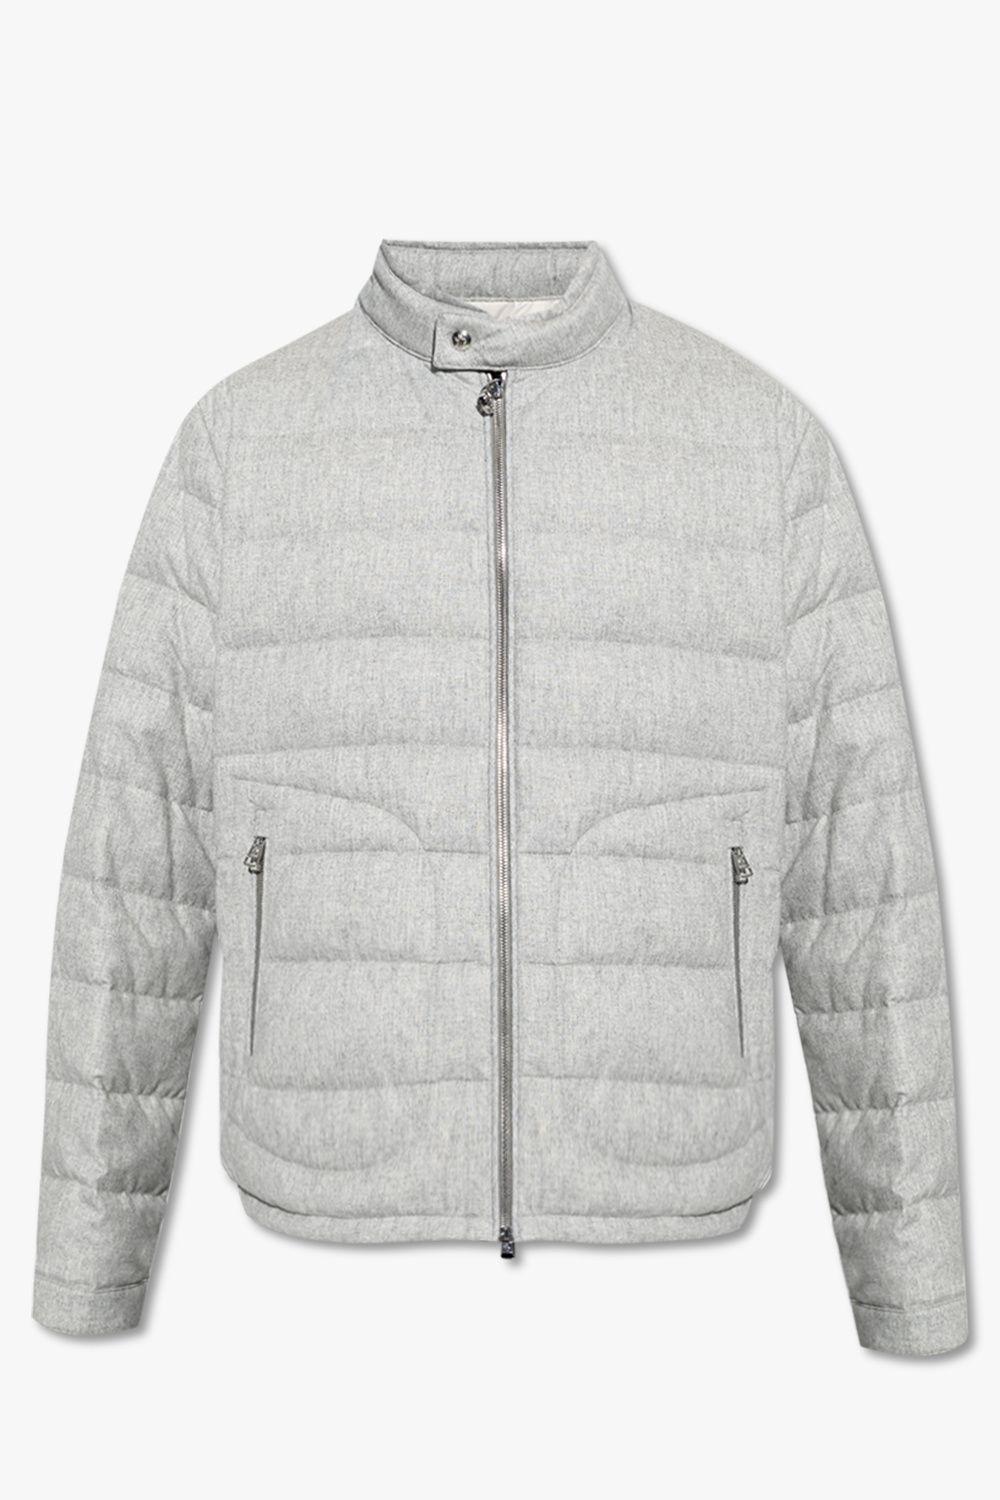 Moncler 'acorus' Jacket in Gray for Men | Lyst